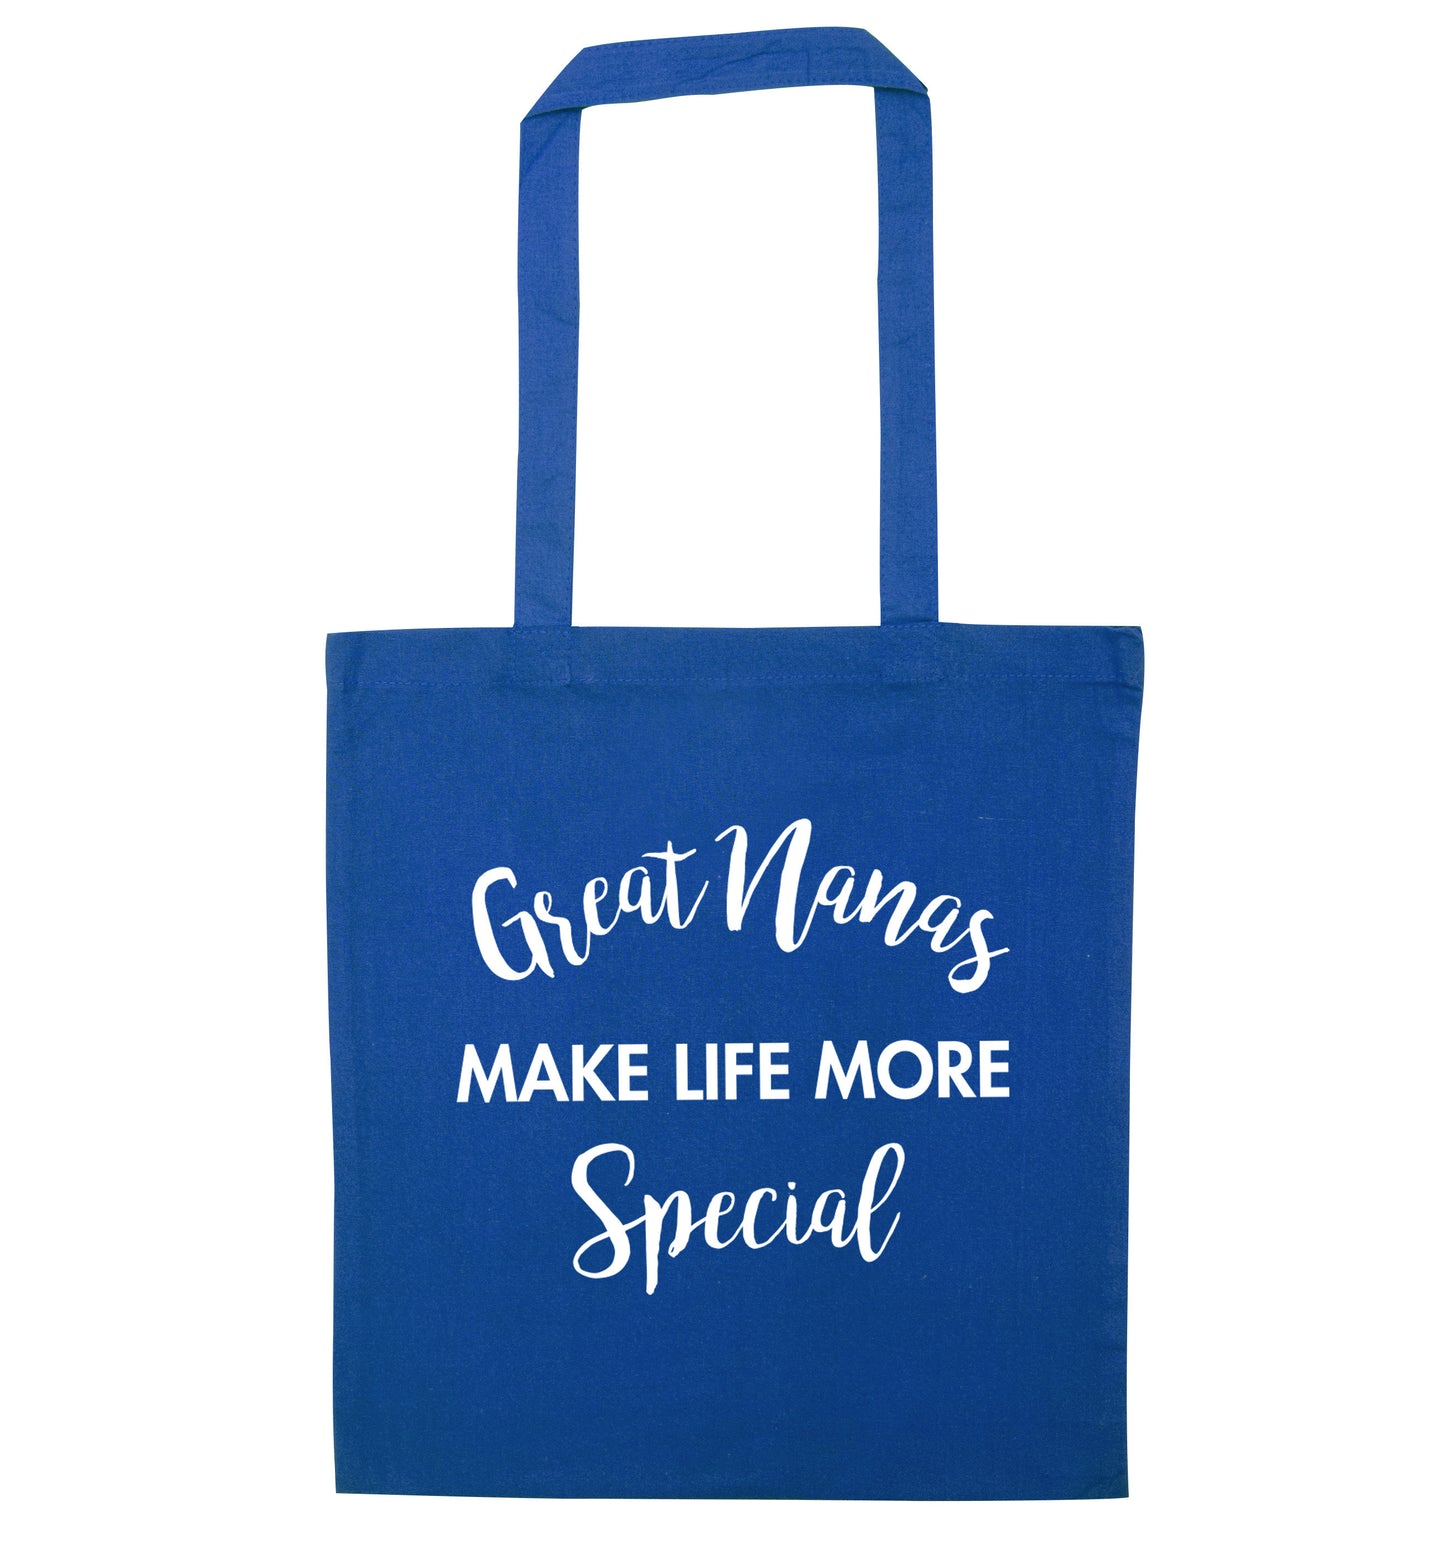 Great nanas make life more special blue tote bag